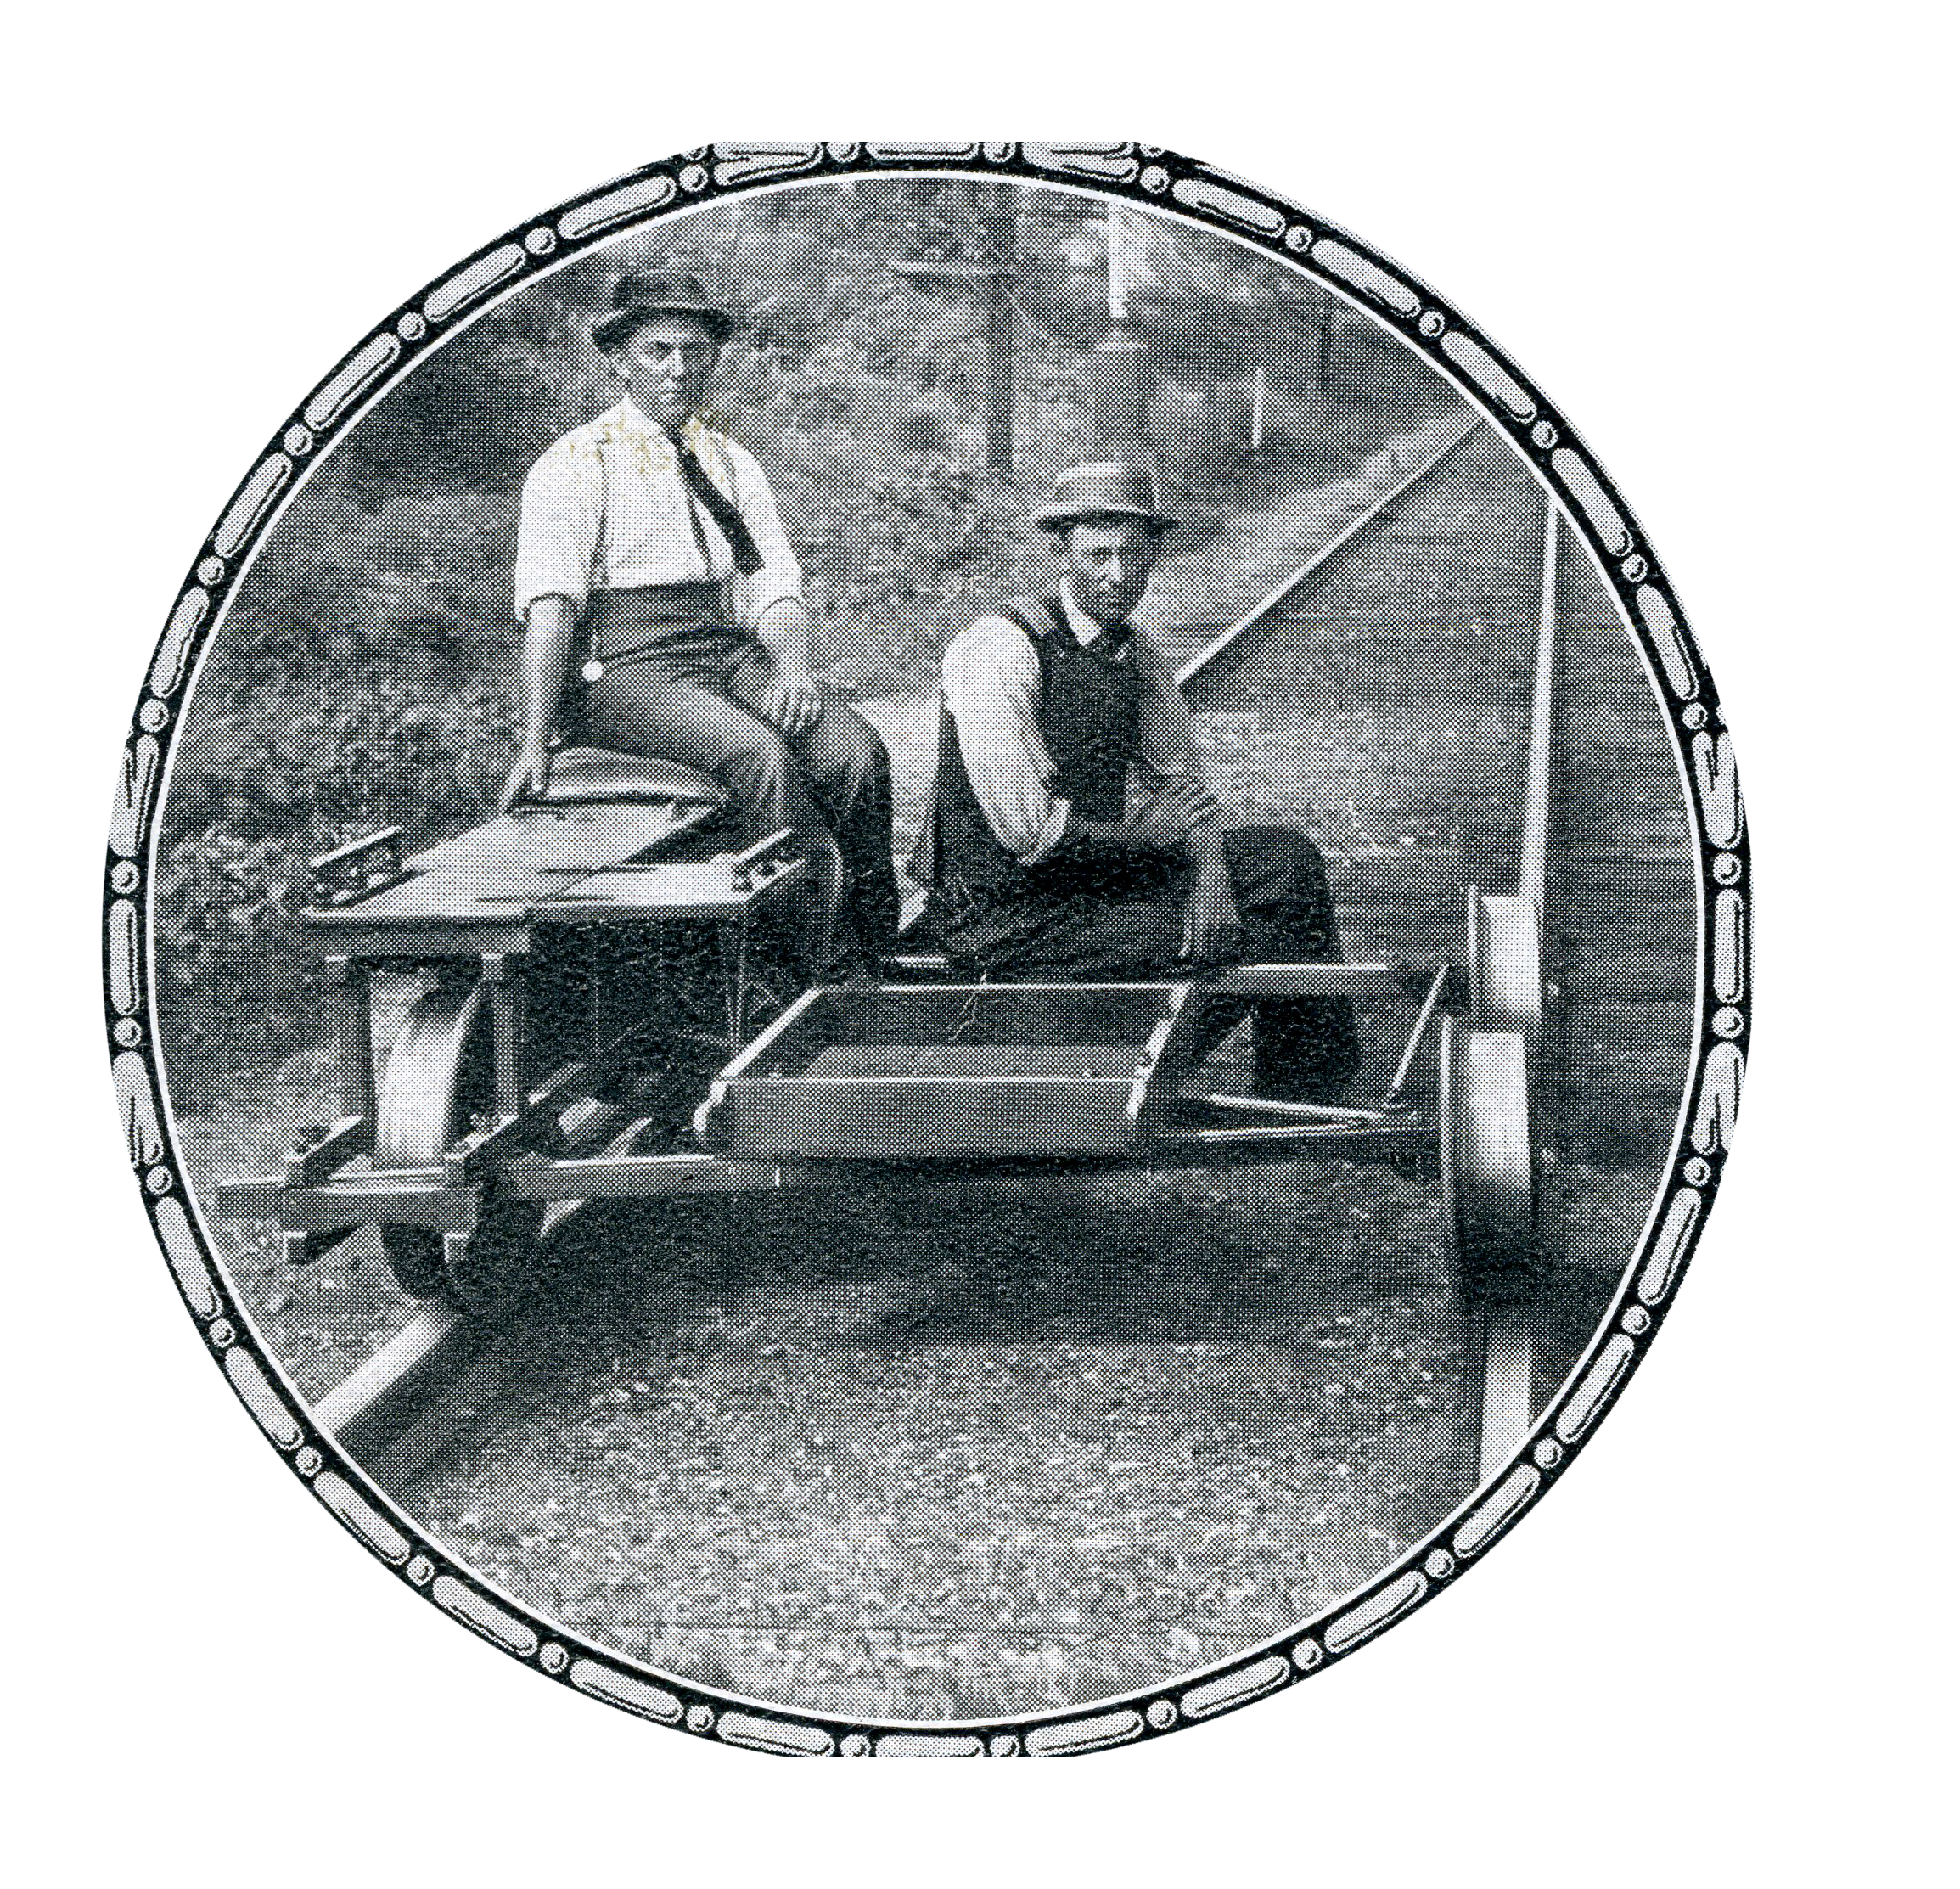 2 well dressed men on an Adams Motorcar, a portable rail vehicle for railway maintenance work.